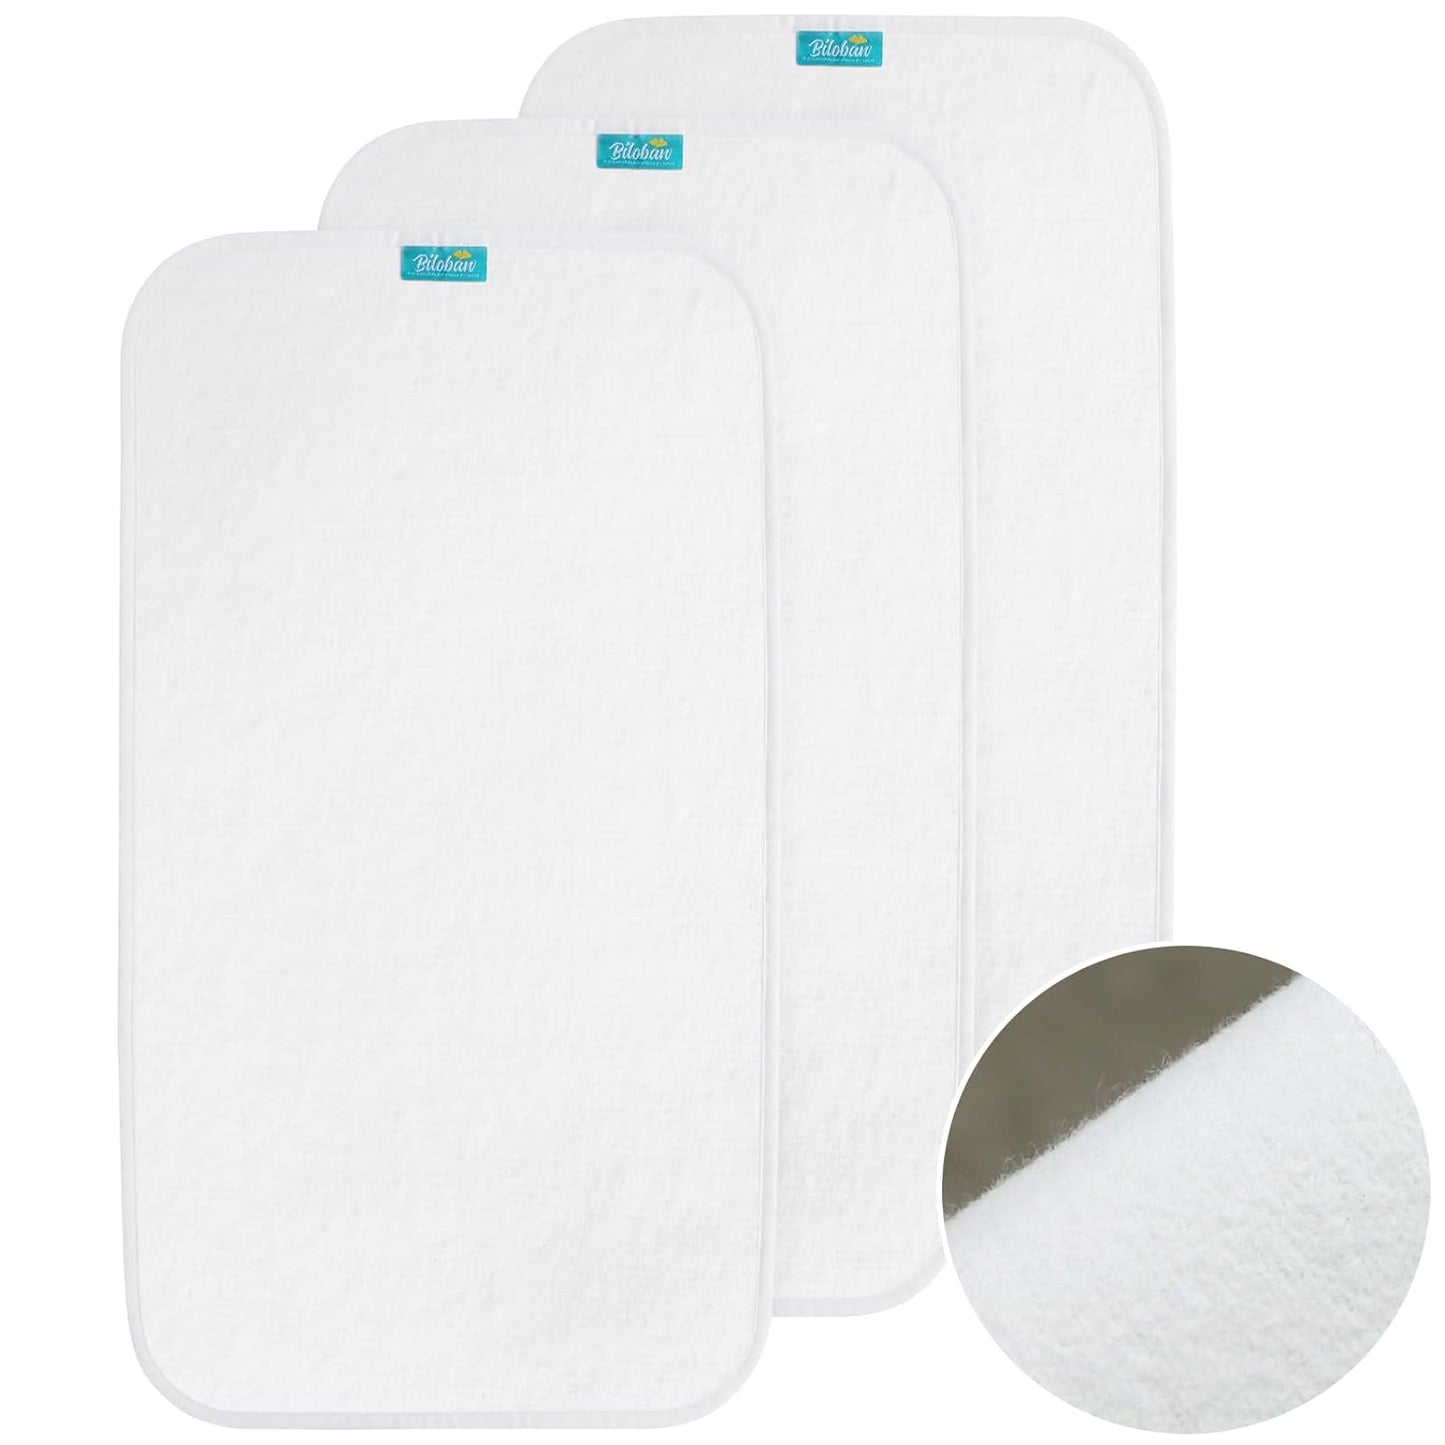 Changing Pad Liners - Cotton Flannel, Waterproof & Absorbent & Skin-Friendly, Diaper Mat - Biloban Online Store